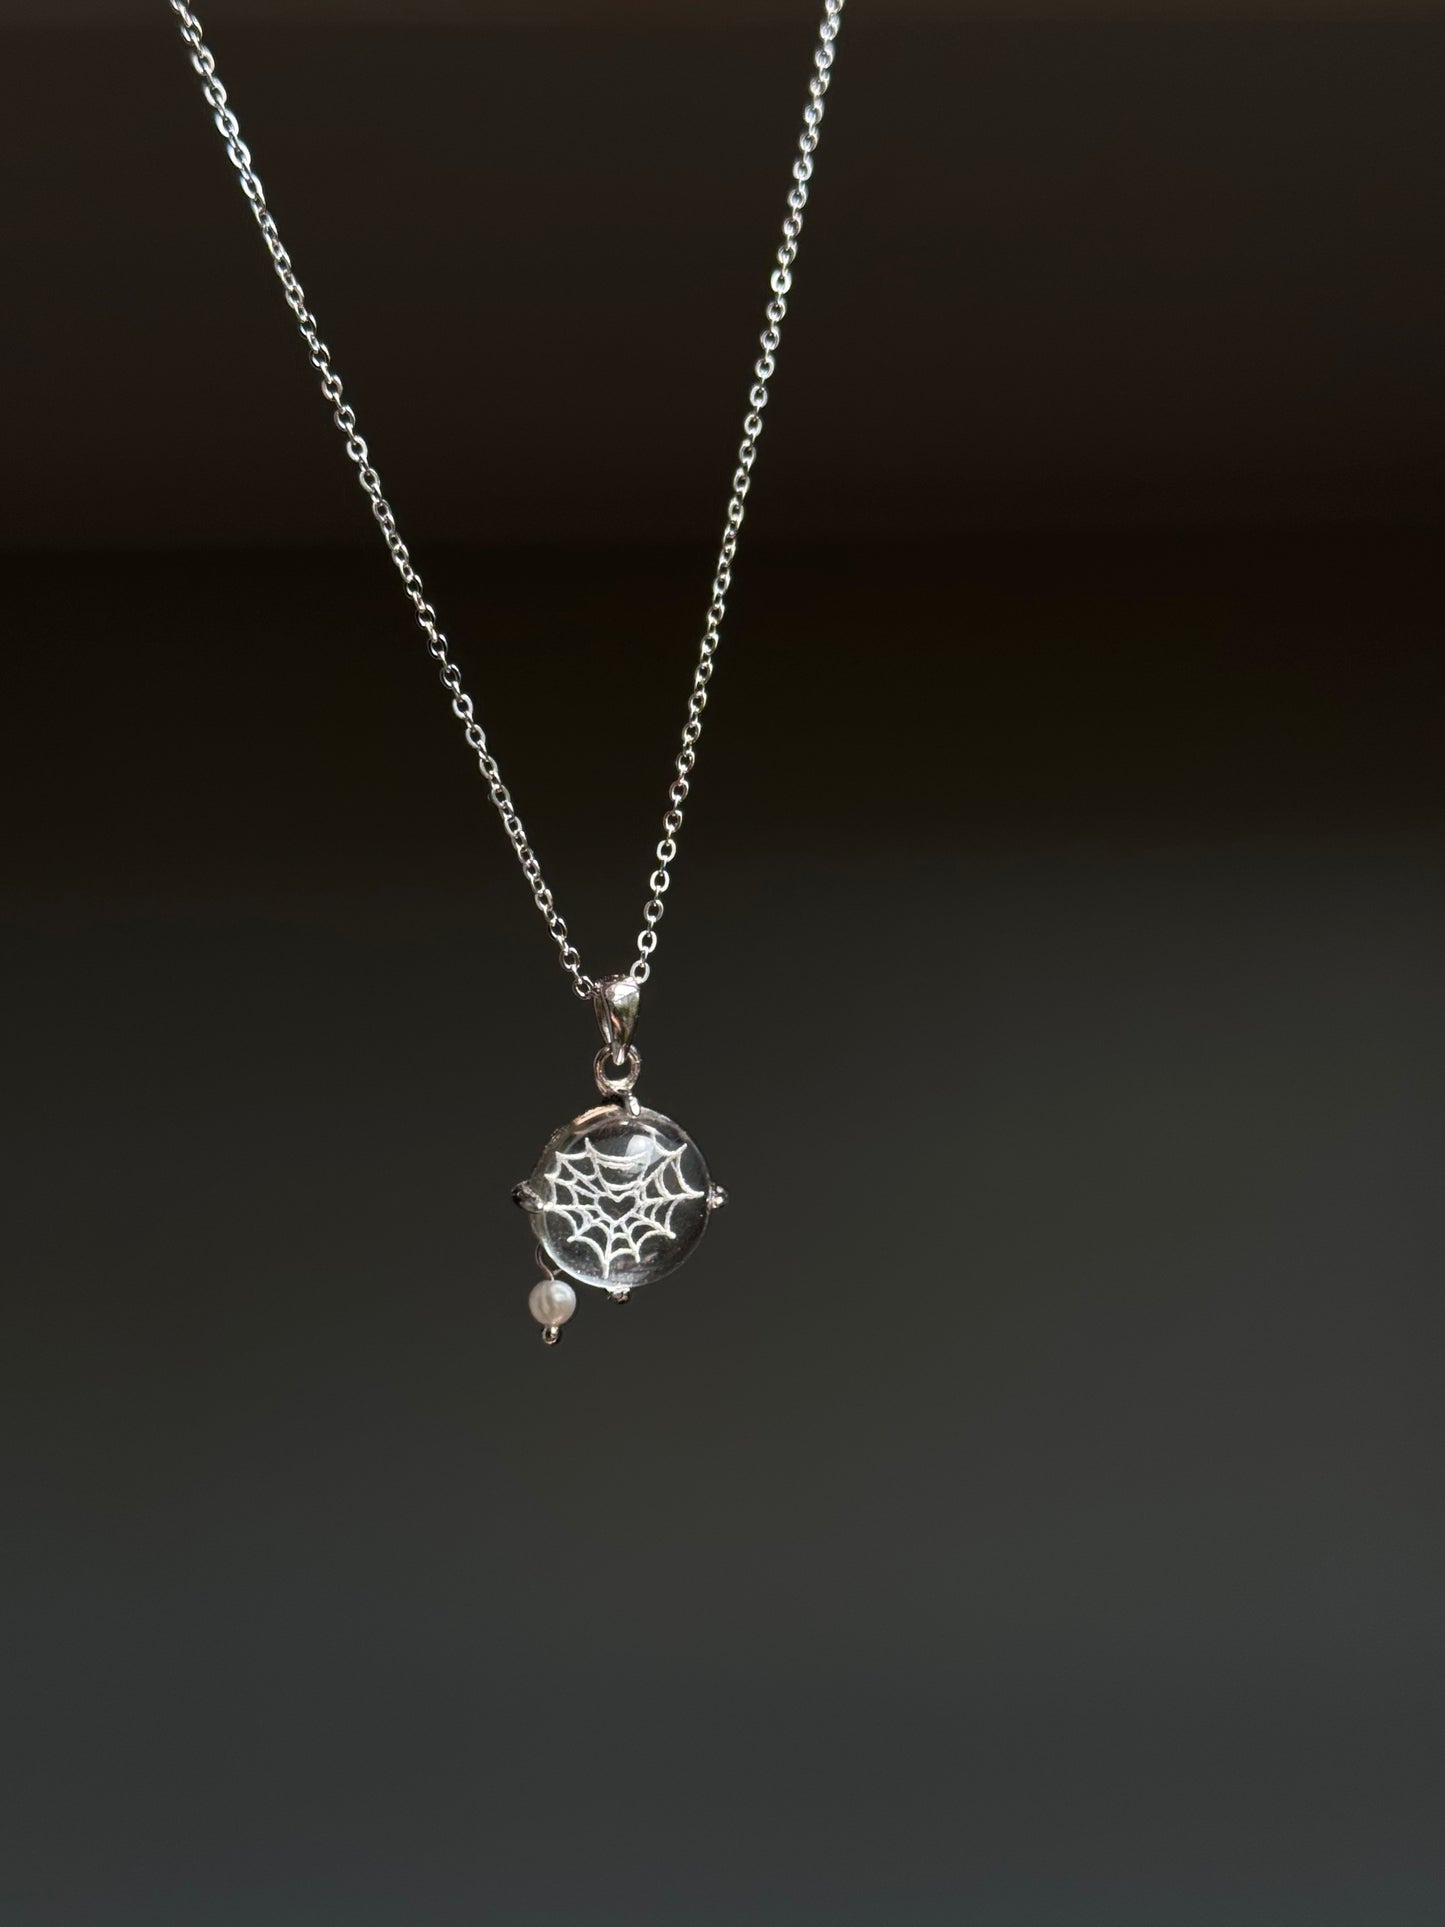 Spiderweb Engraved Crystal Silver Necklace